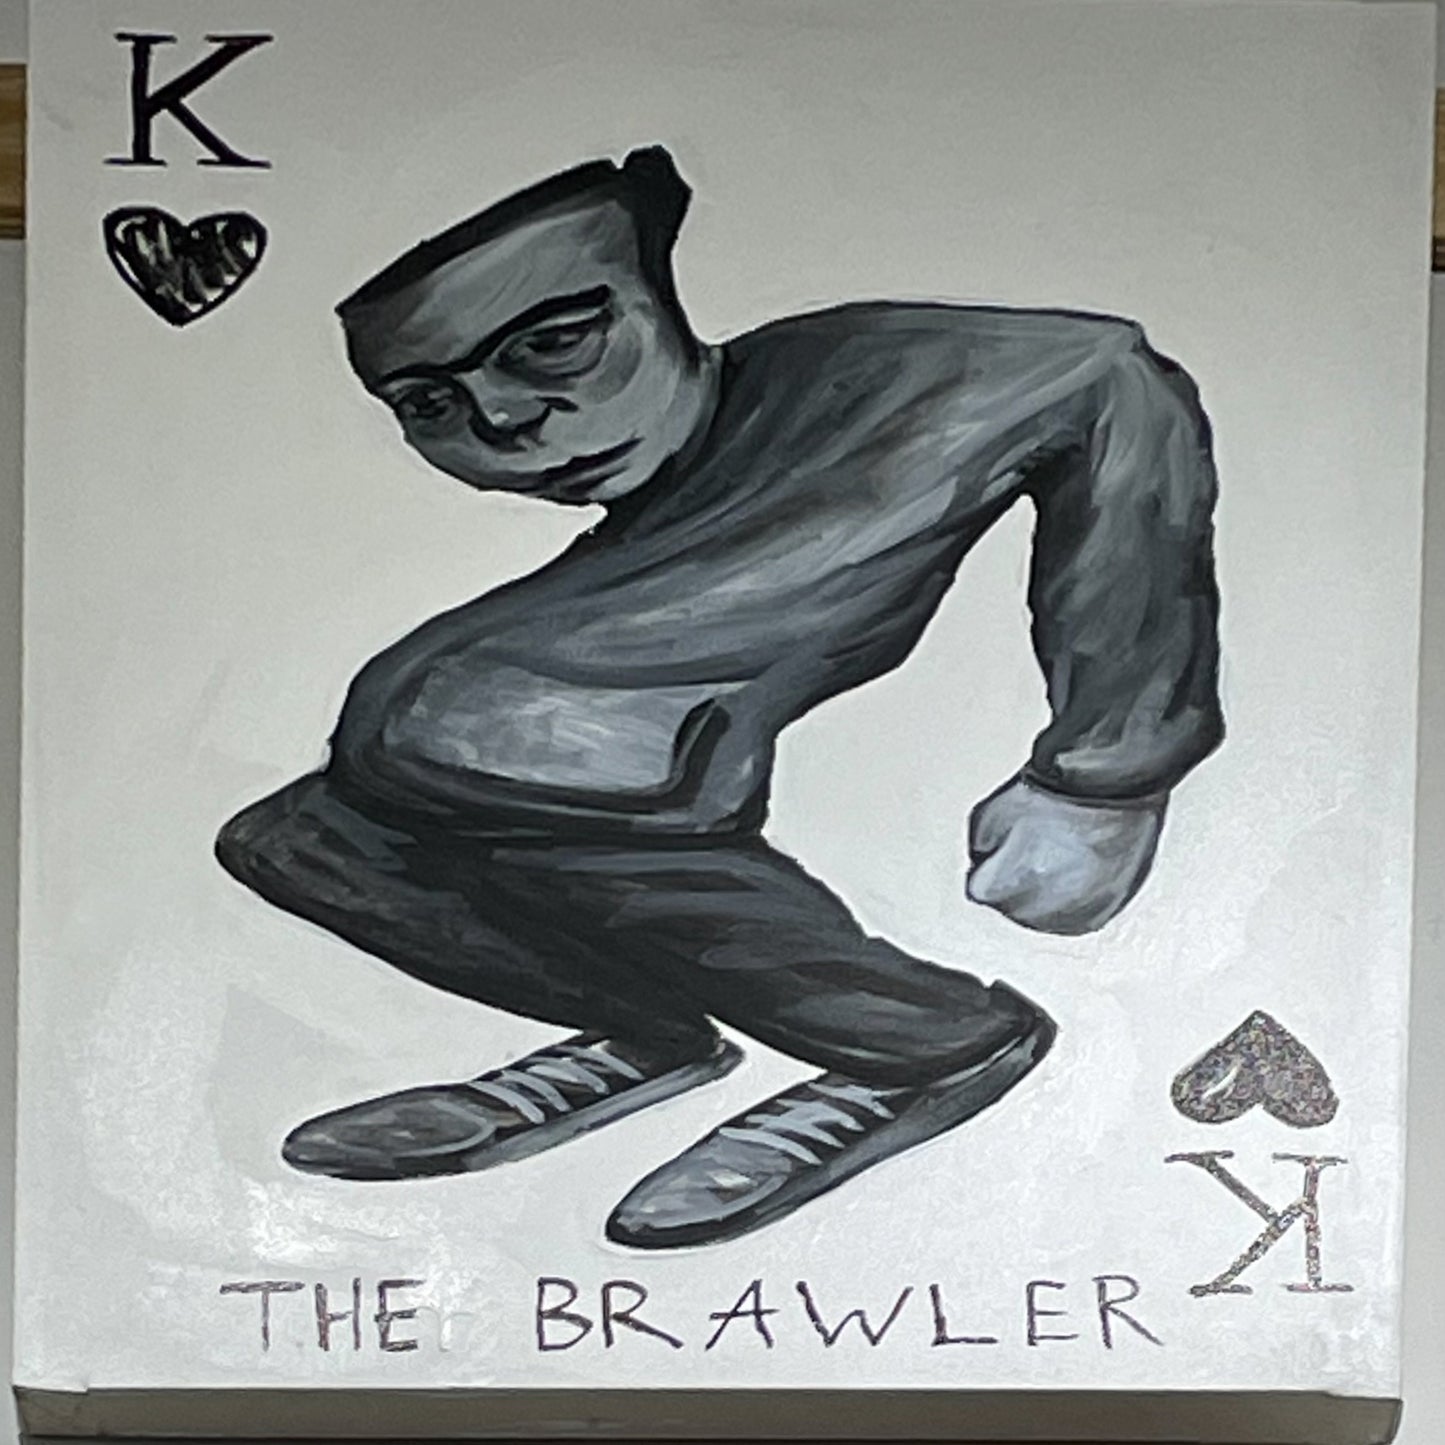 The Brawler by Trihumph